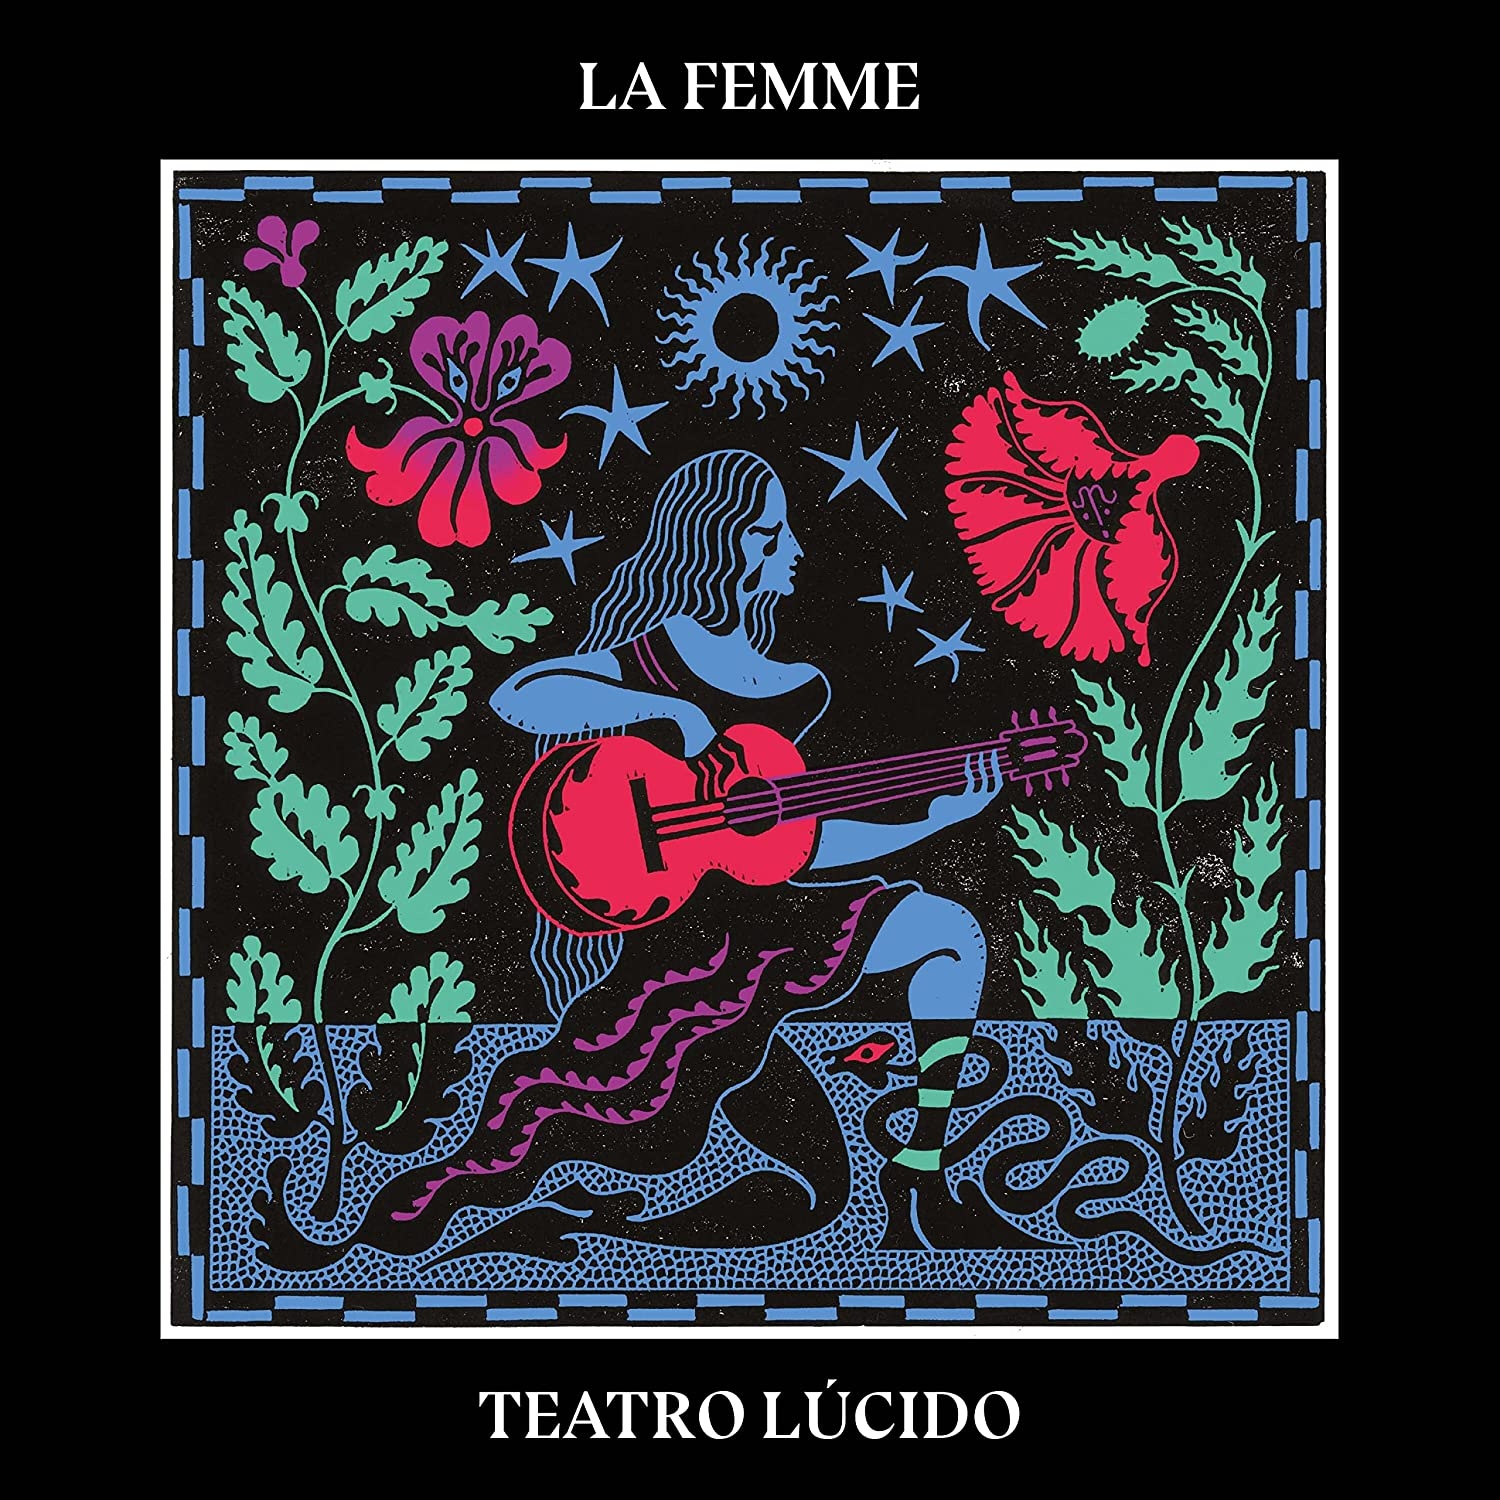 La Femme - Teatro Lúcido vinyl cover